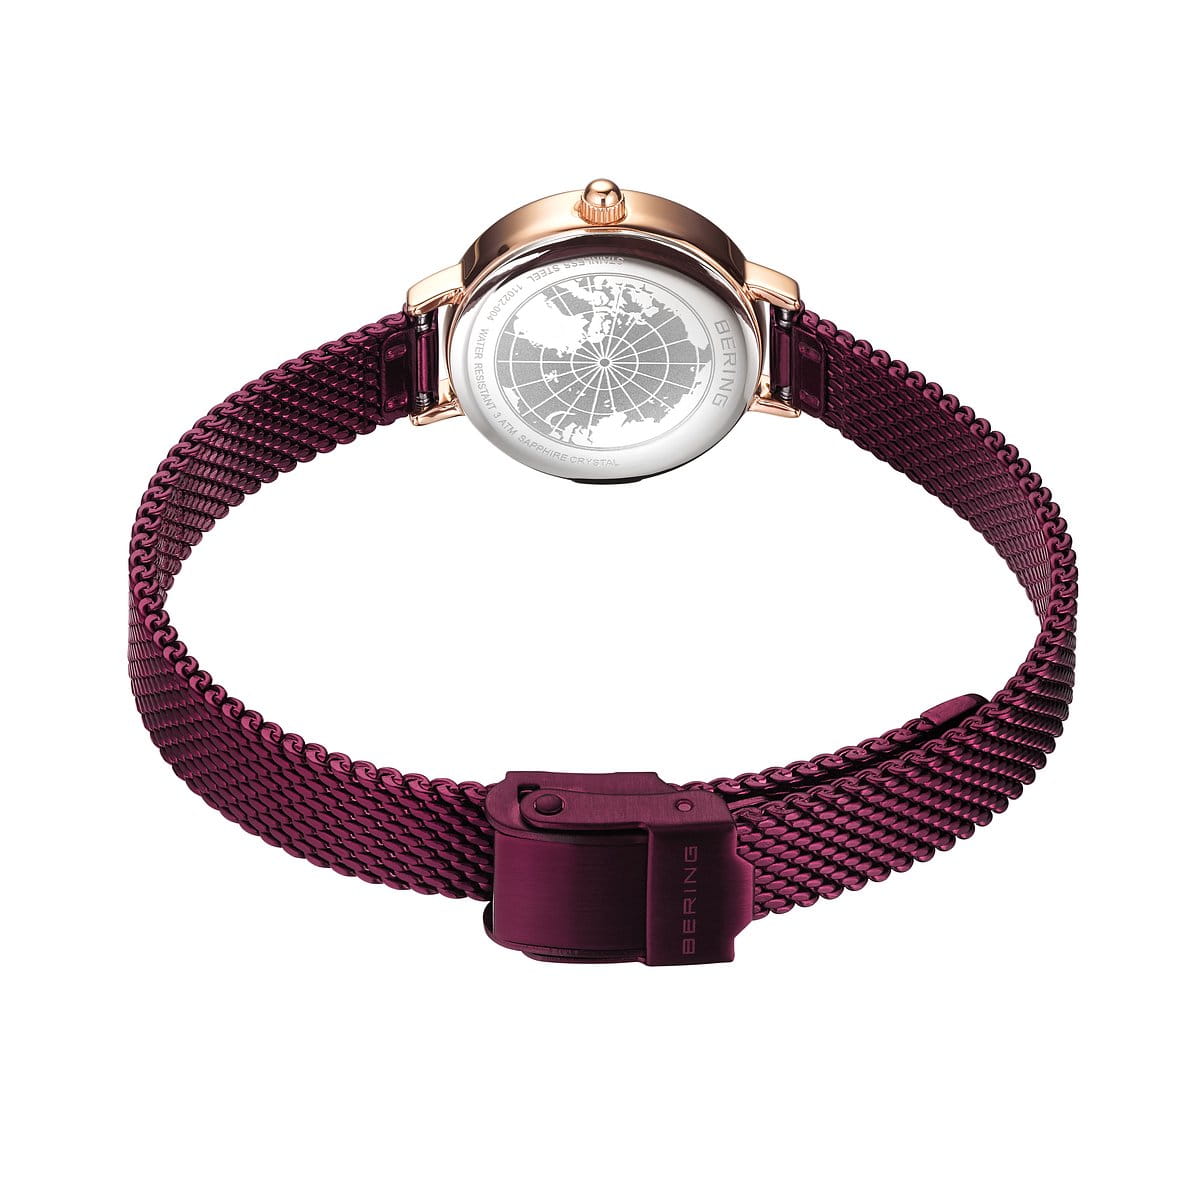 Bering Classic Purple Lights Rose Gold 26mm Watch